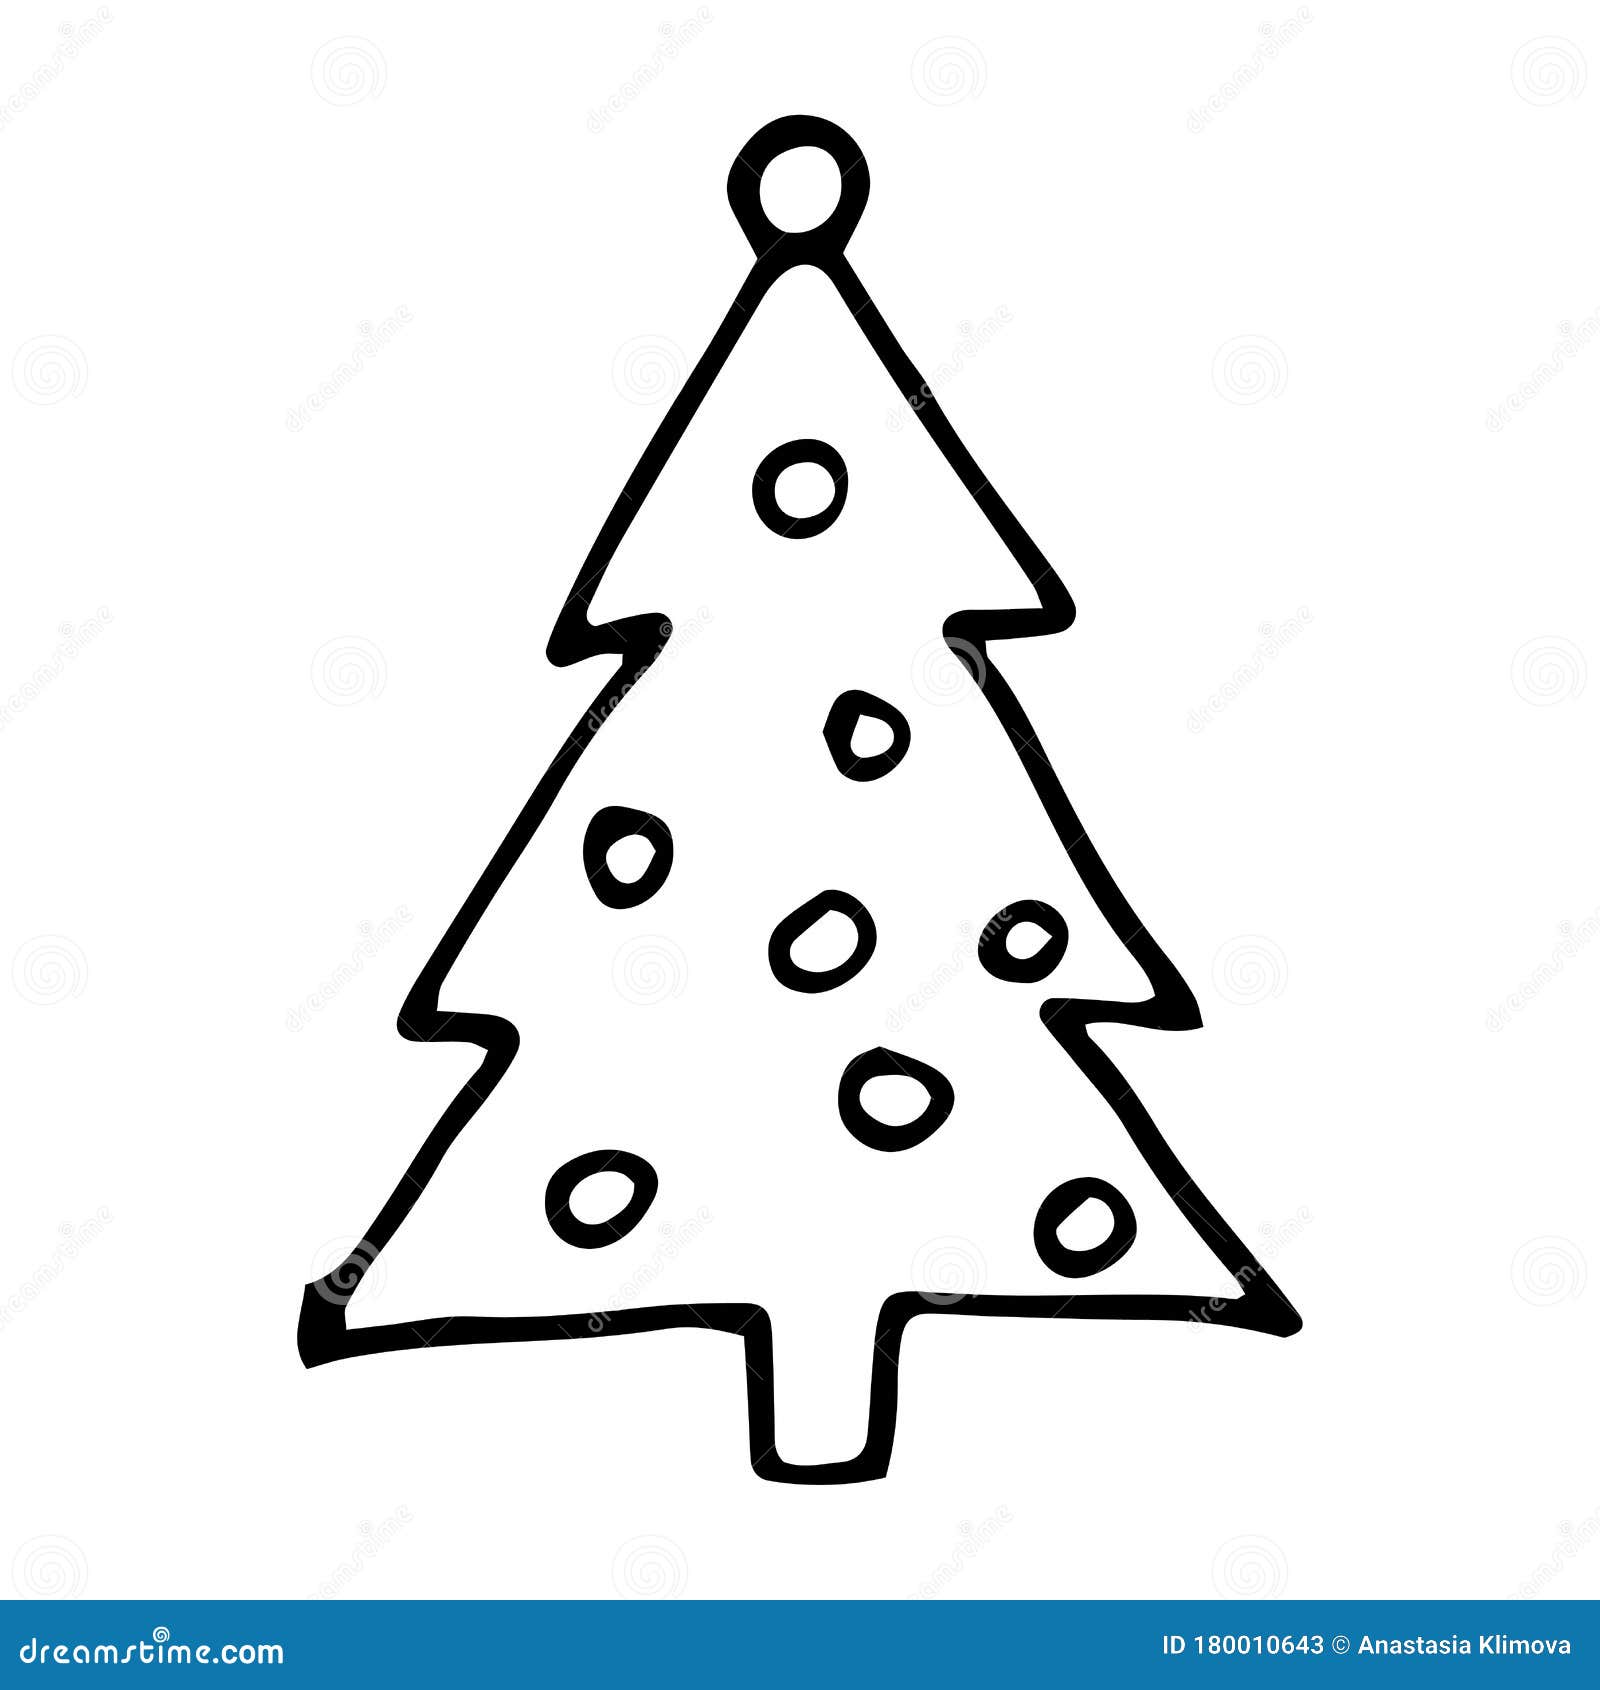 How to draw a Christmas Tree | Step by step Drawing tutorials-saigonsouth.com.vn